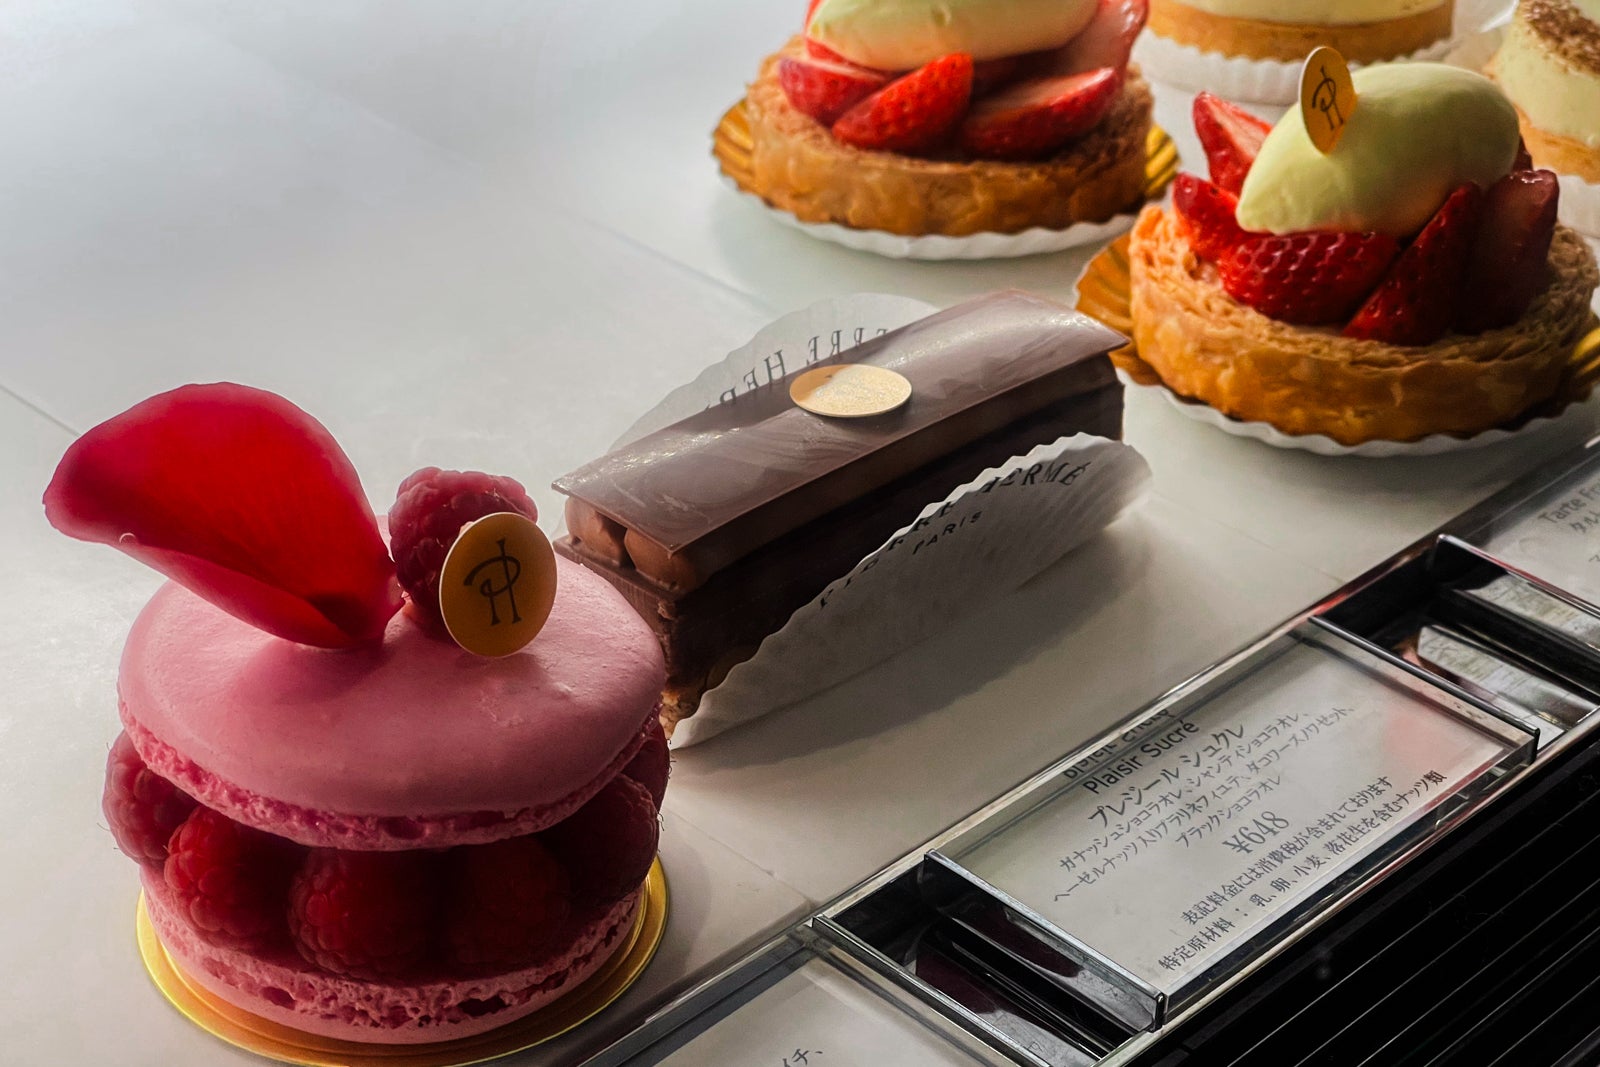 Pierre Herme desserts at The Ritz-Carlton, Kyoto